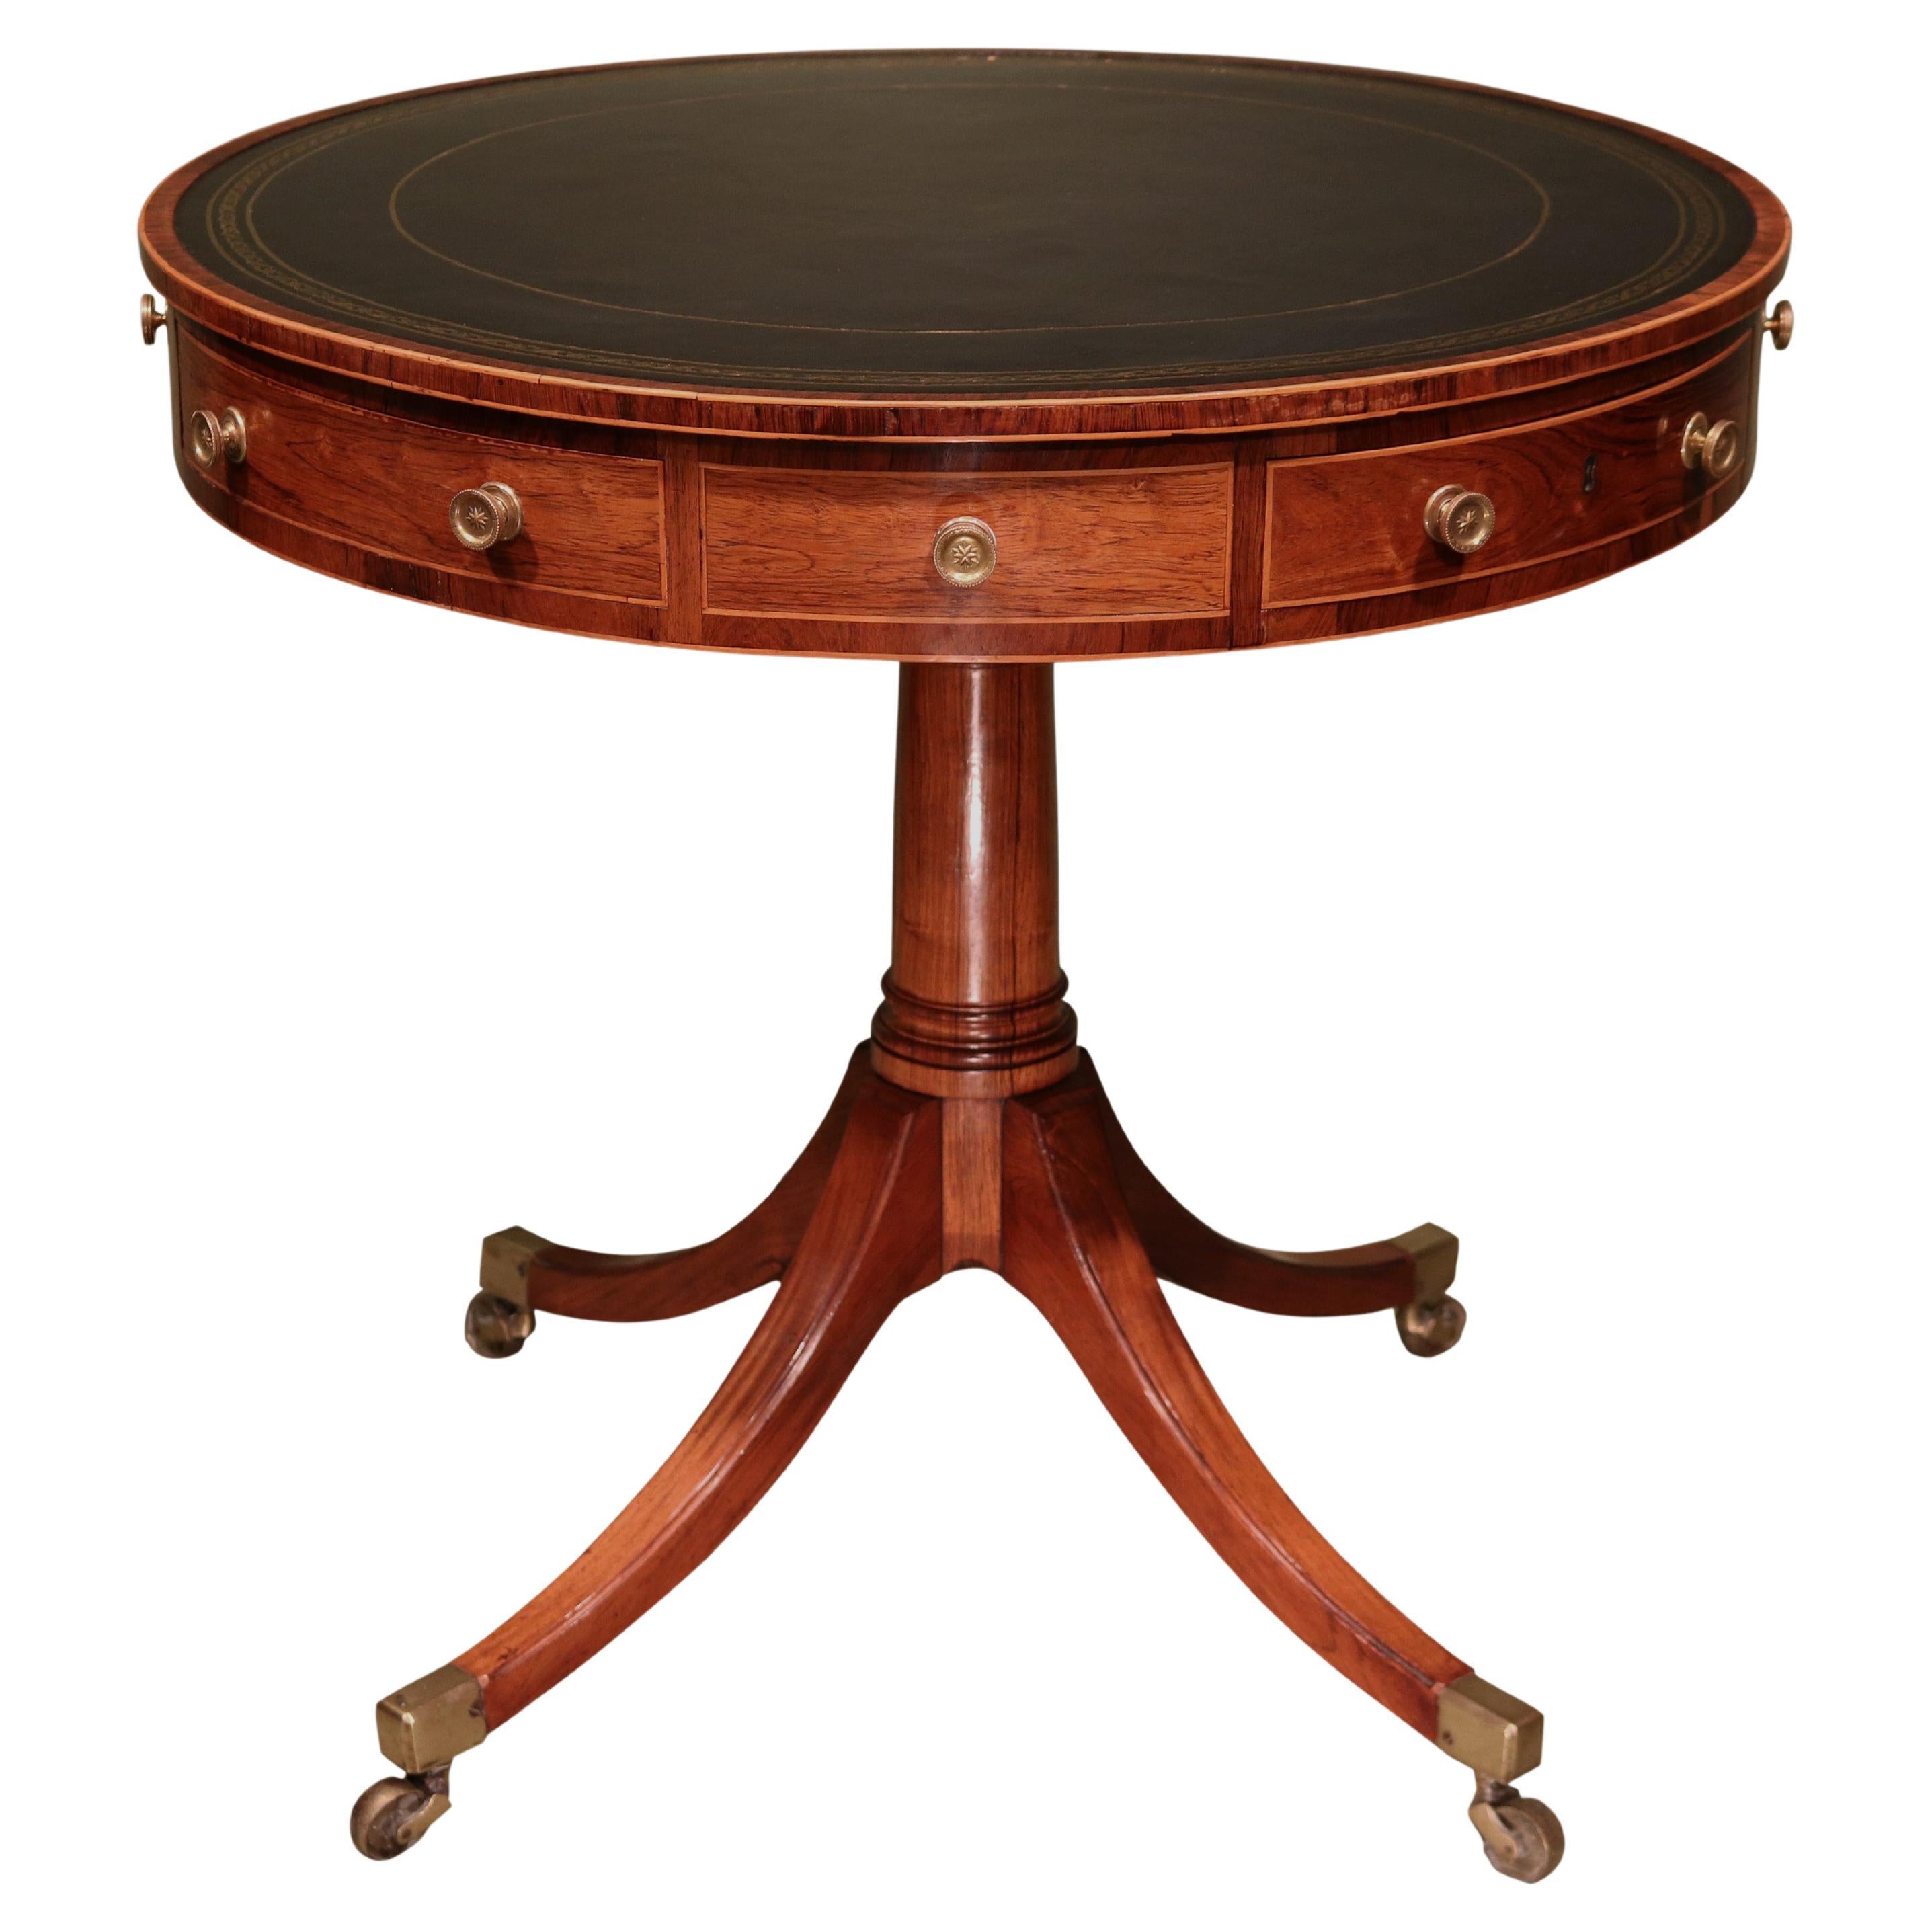 Antique Regency period rosewood drum table